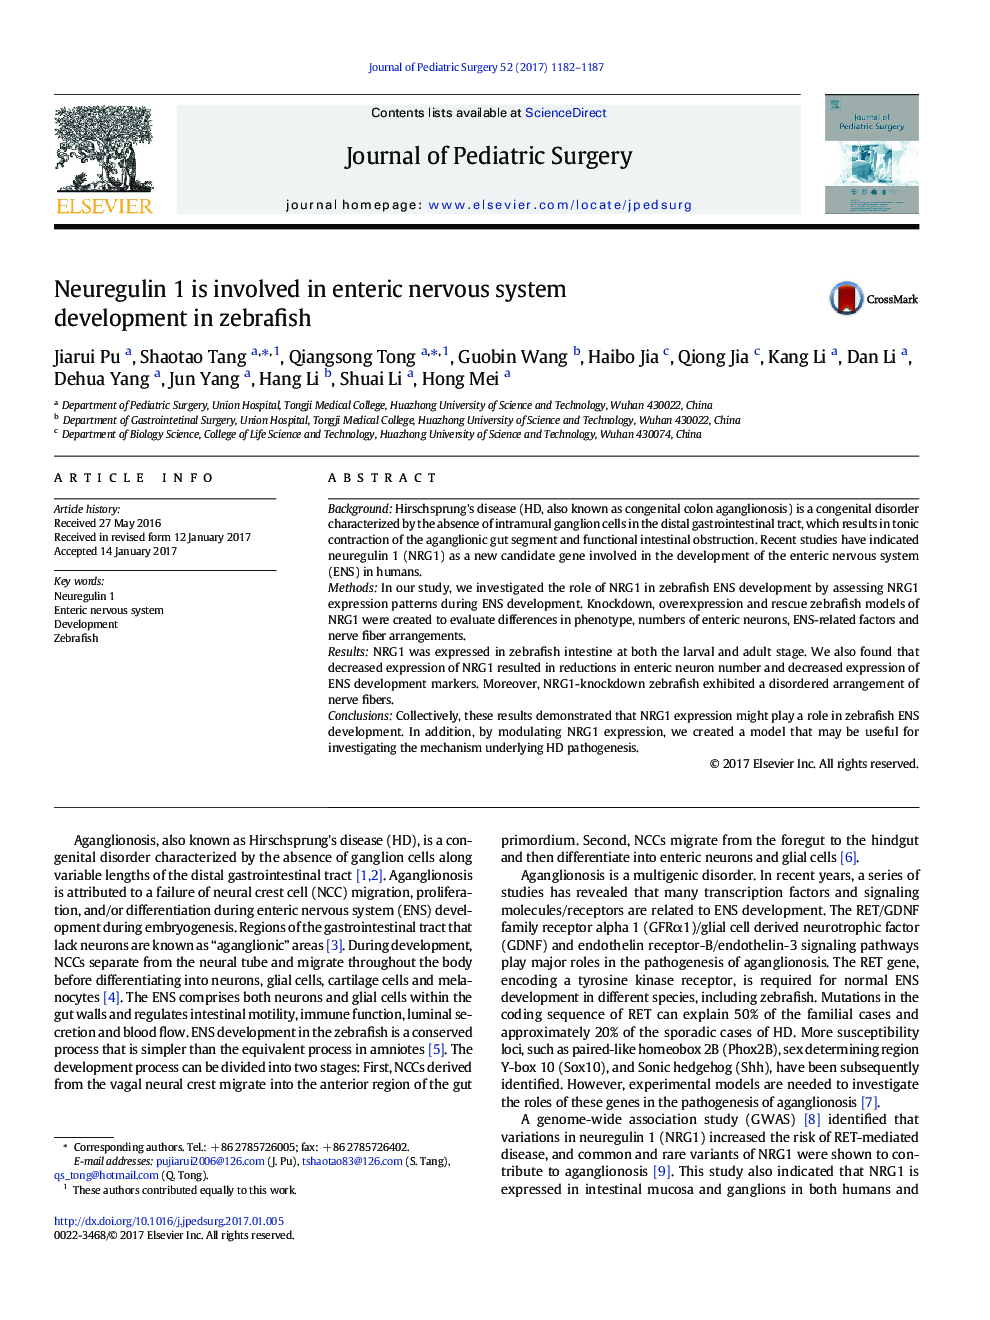 Basic Science PaperNeuregulin 1 is involved in enteric nervous system development in zebrafish